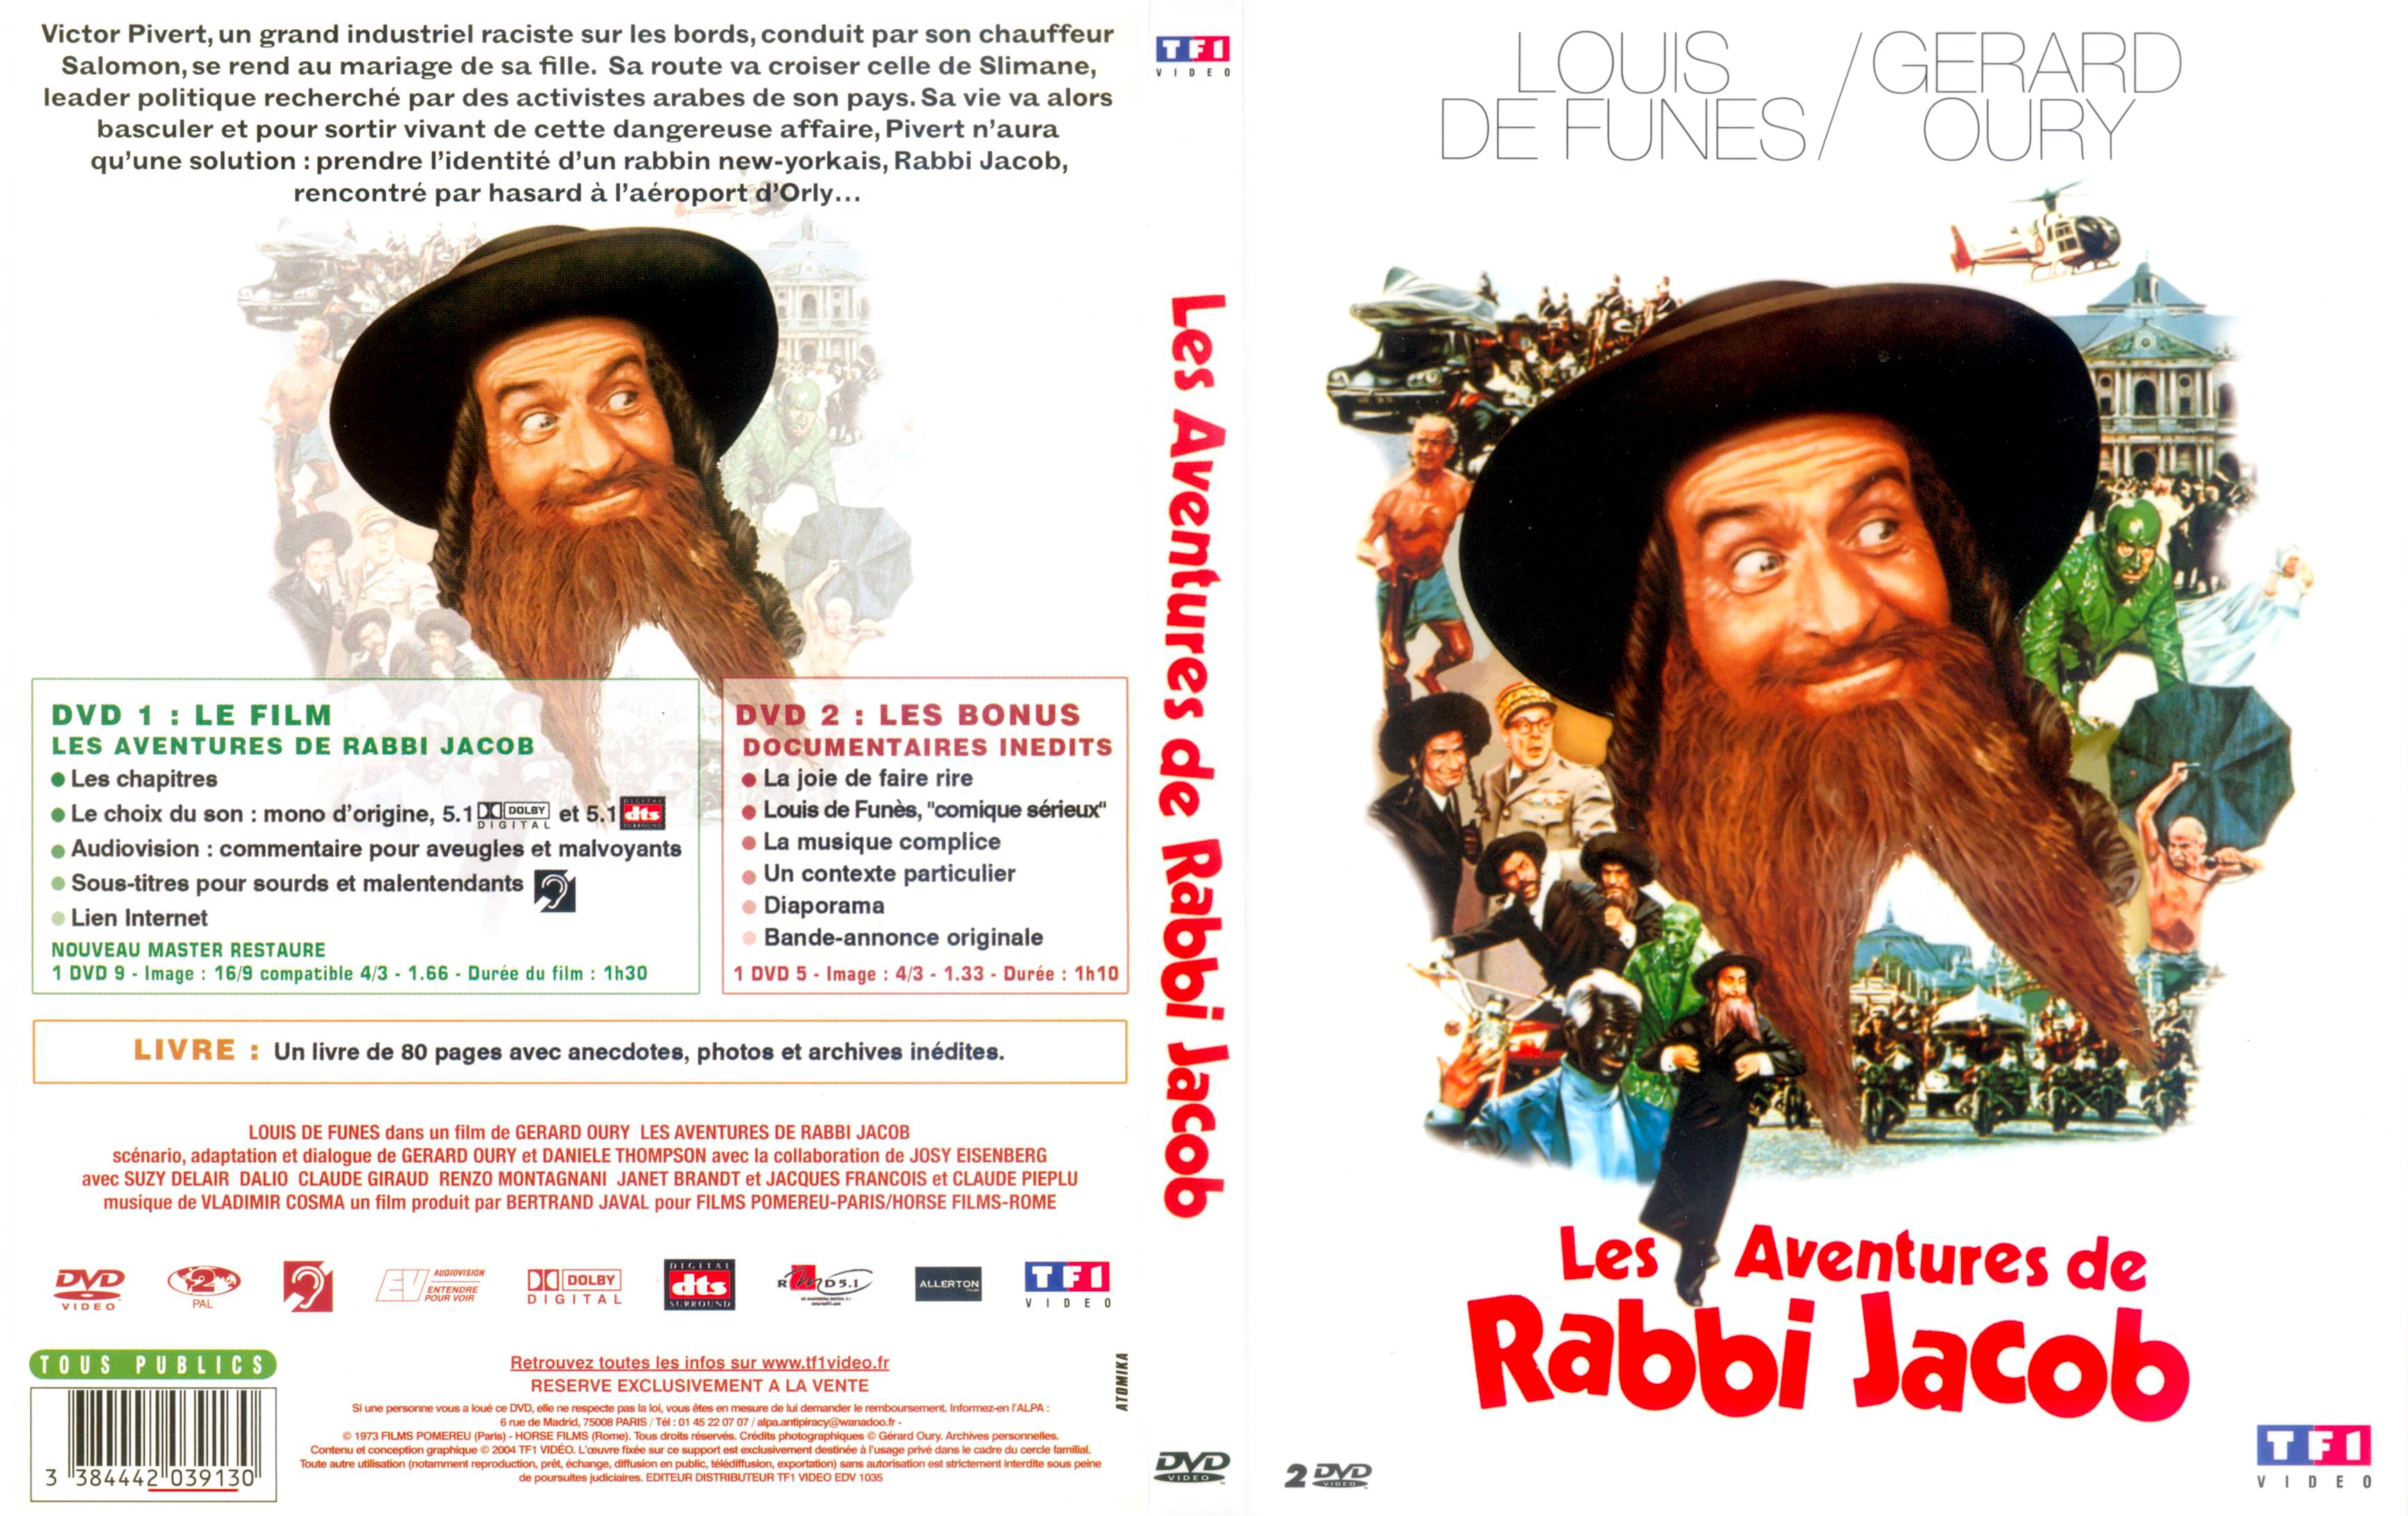 Jaquette DVD Les aventures de Rabbi Jacob v3